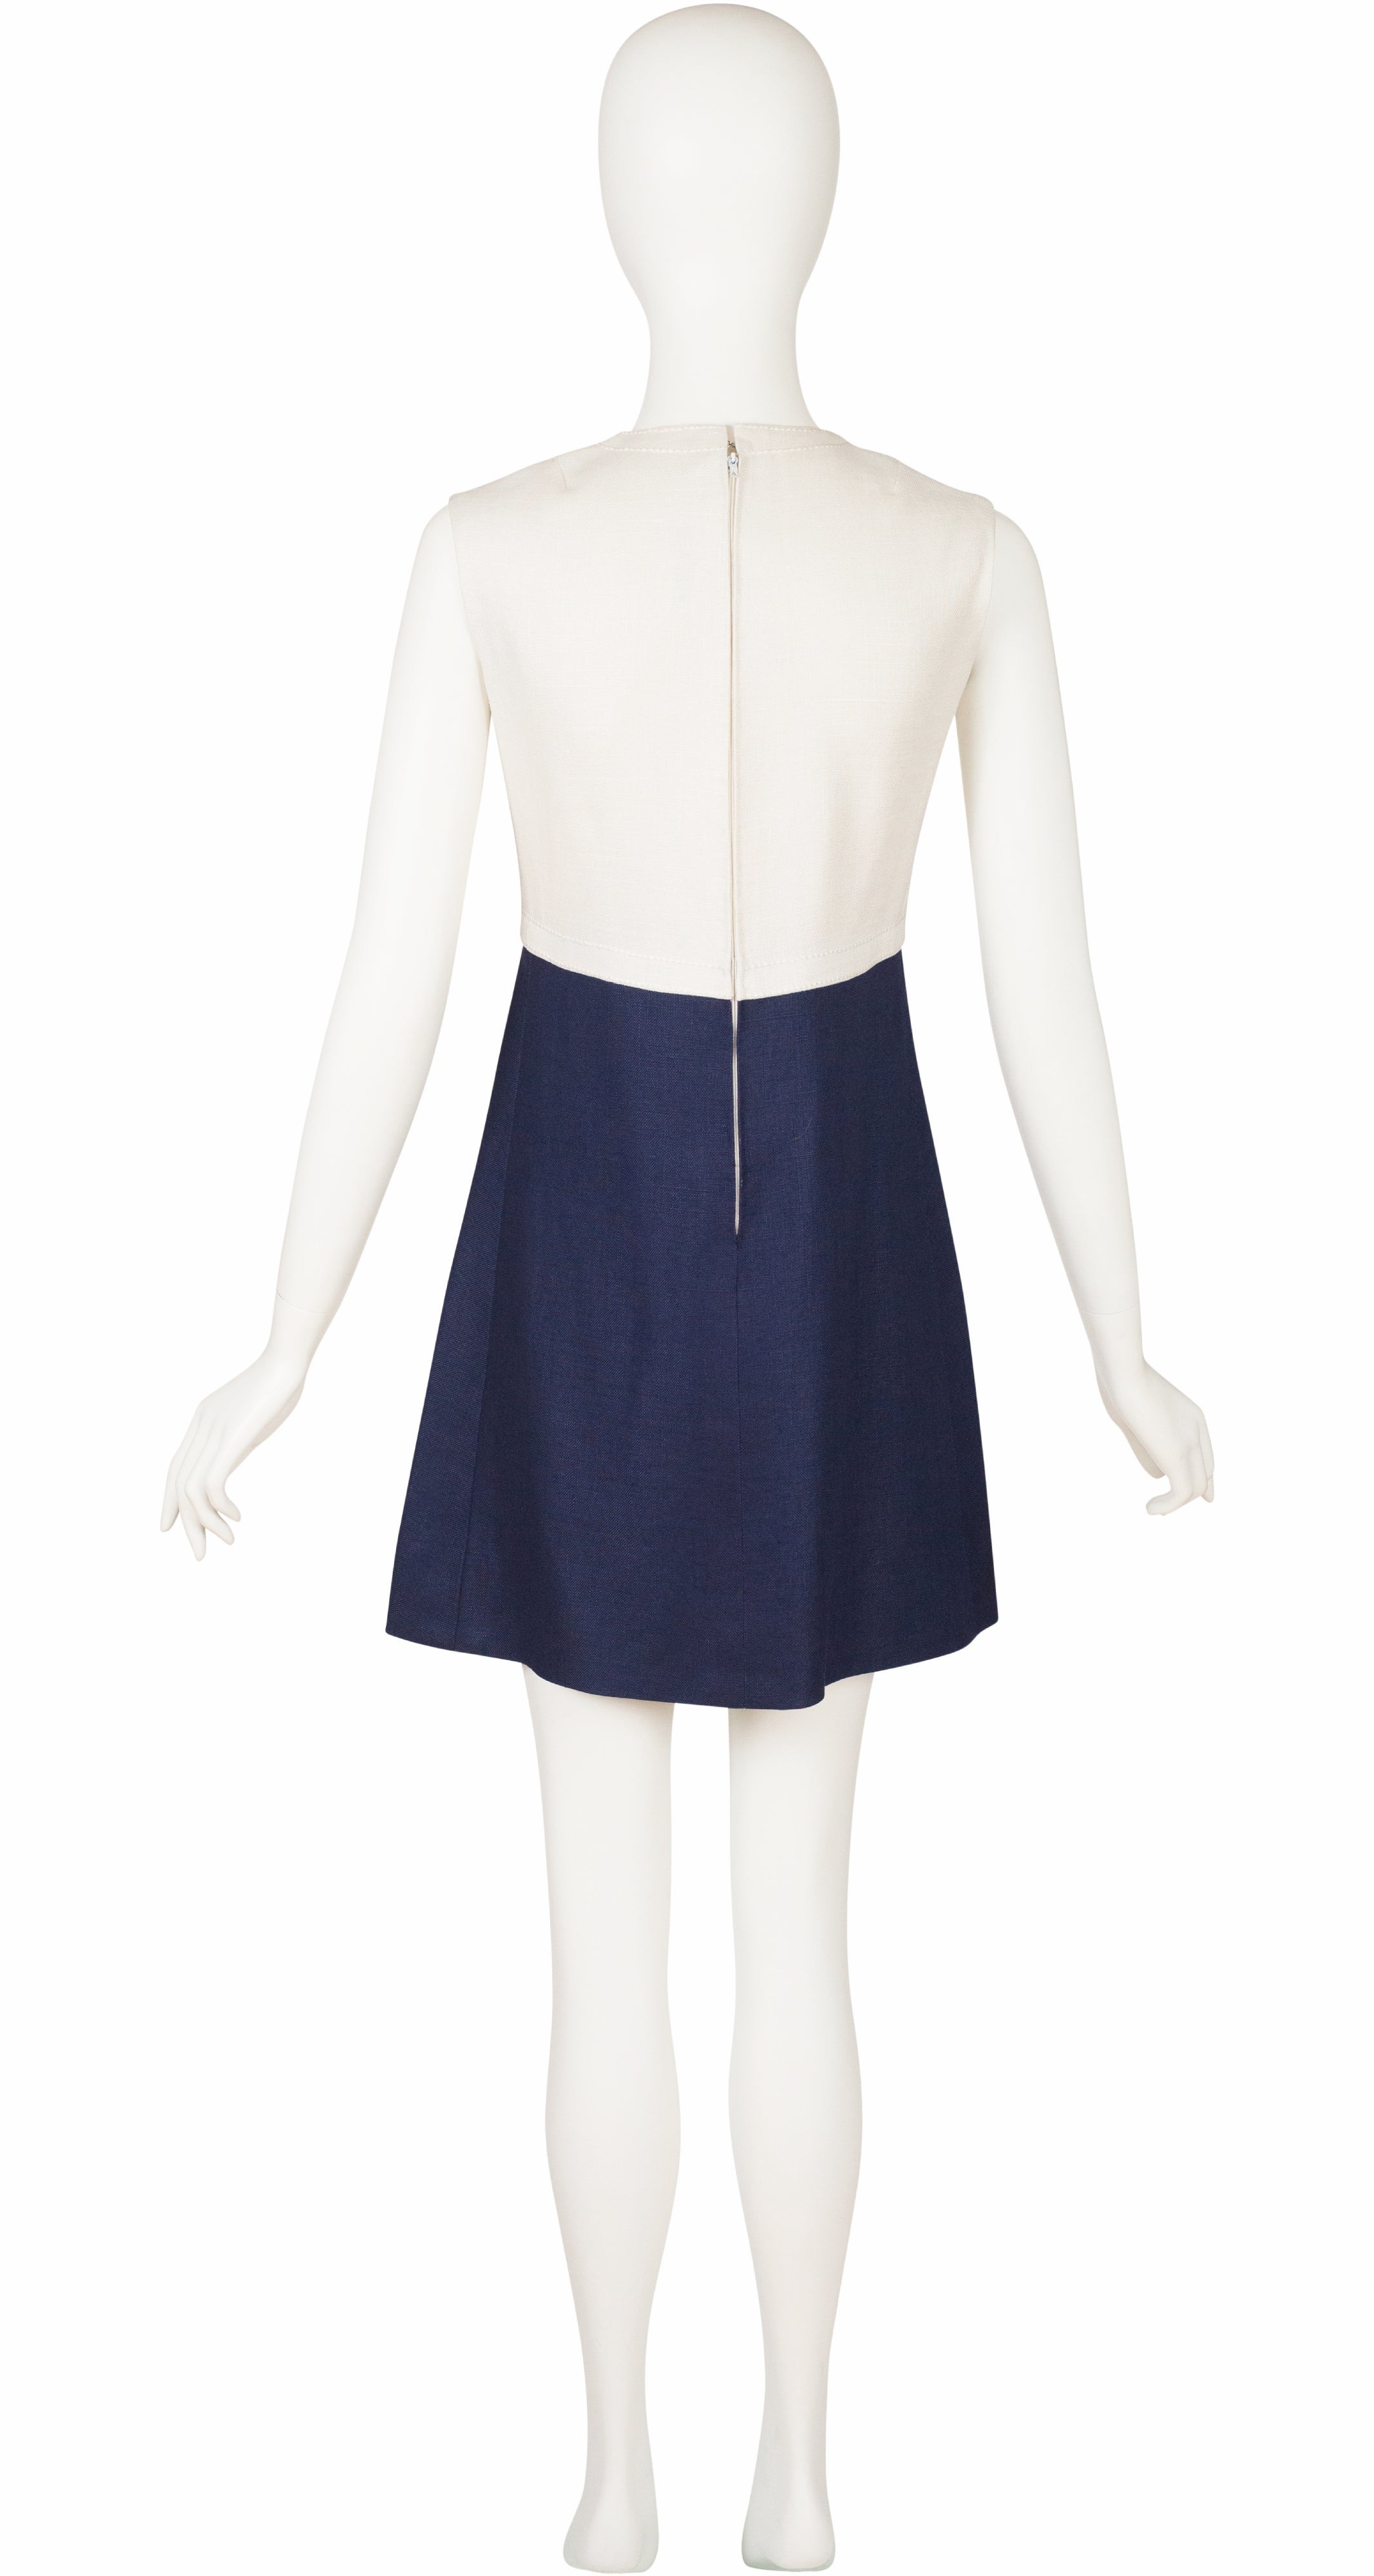 1960s Mod Navy Blue & White Mini Dress